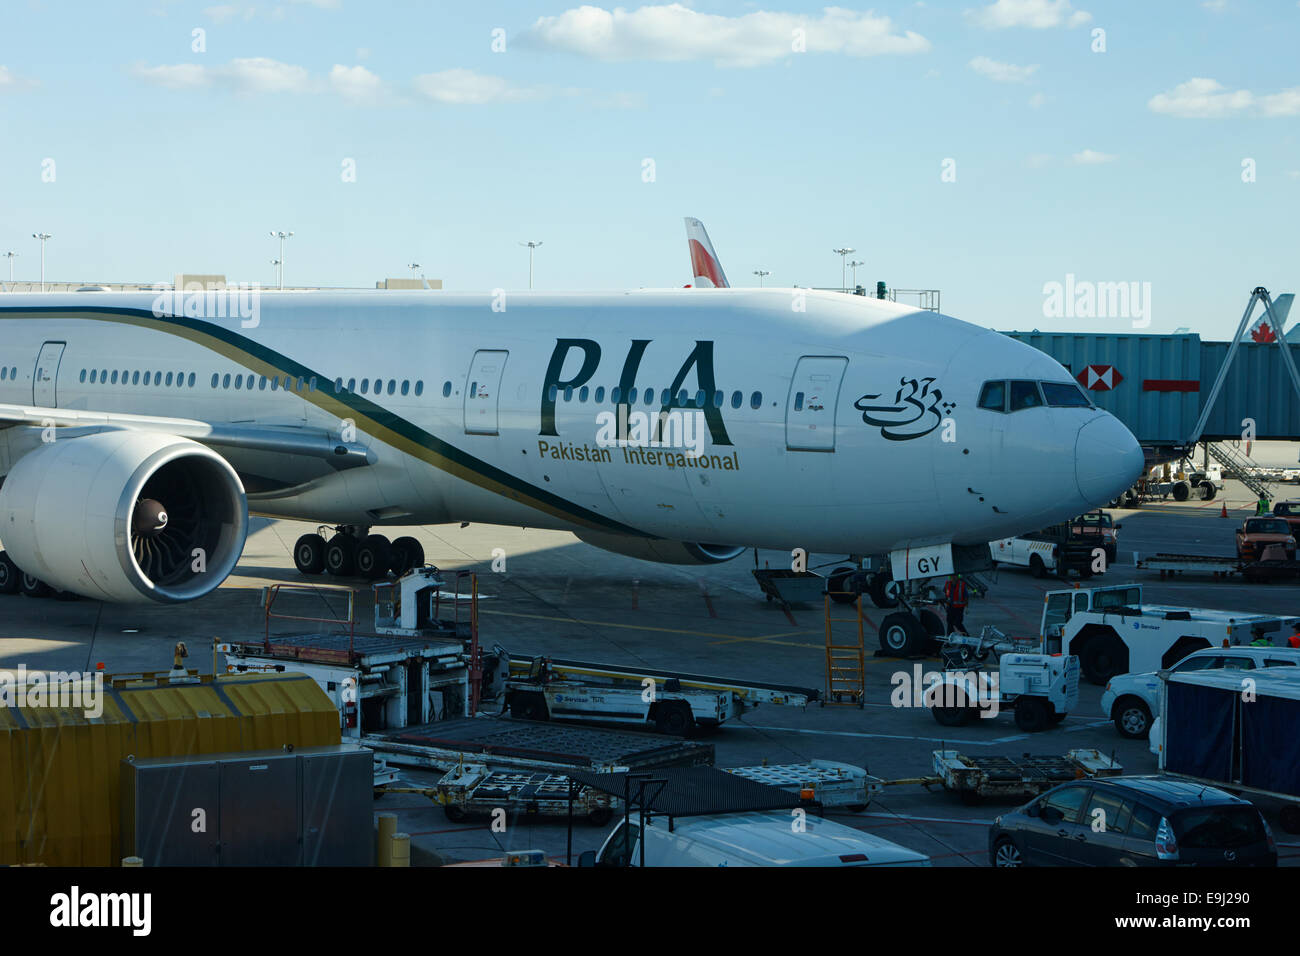 pakistan international airlines aircraft at terminal 3 toronto pearson international airport Canada Stock Photo